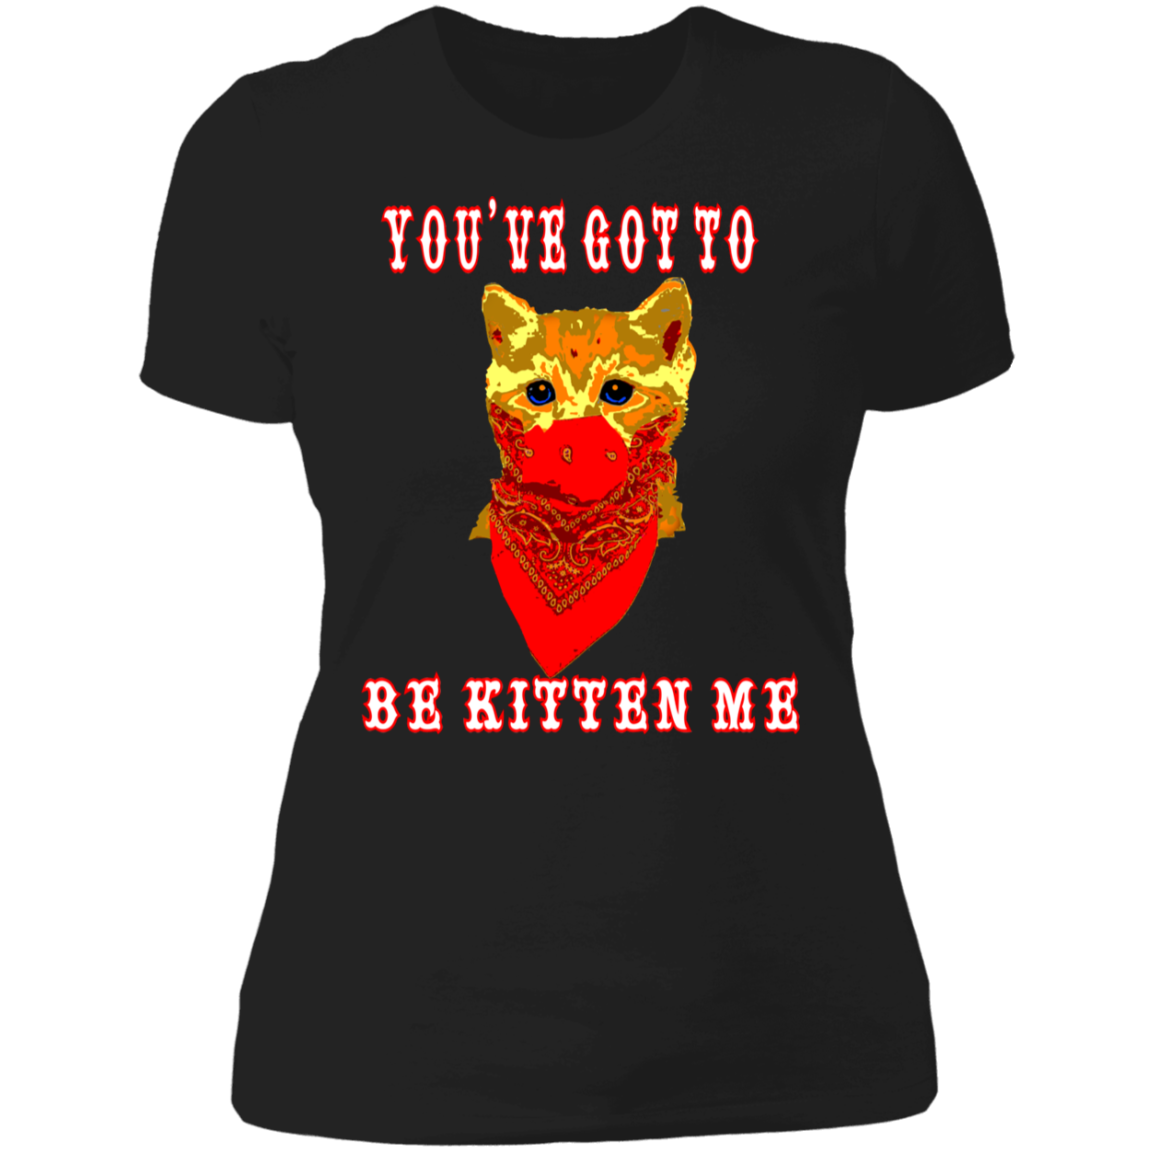 ArtichokeUSA Custom Design. You've Got To Be Kitten Me?! 2020, Not What We Expected. Ladies' Boyfriend T-Shirt